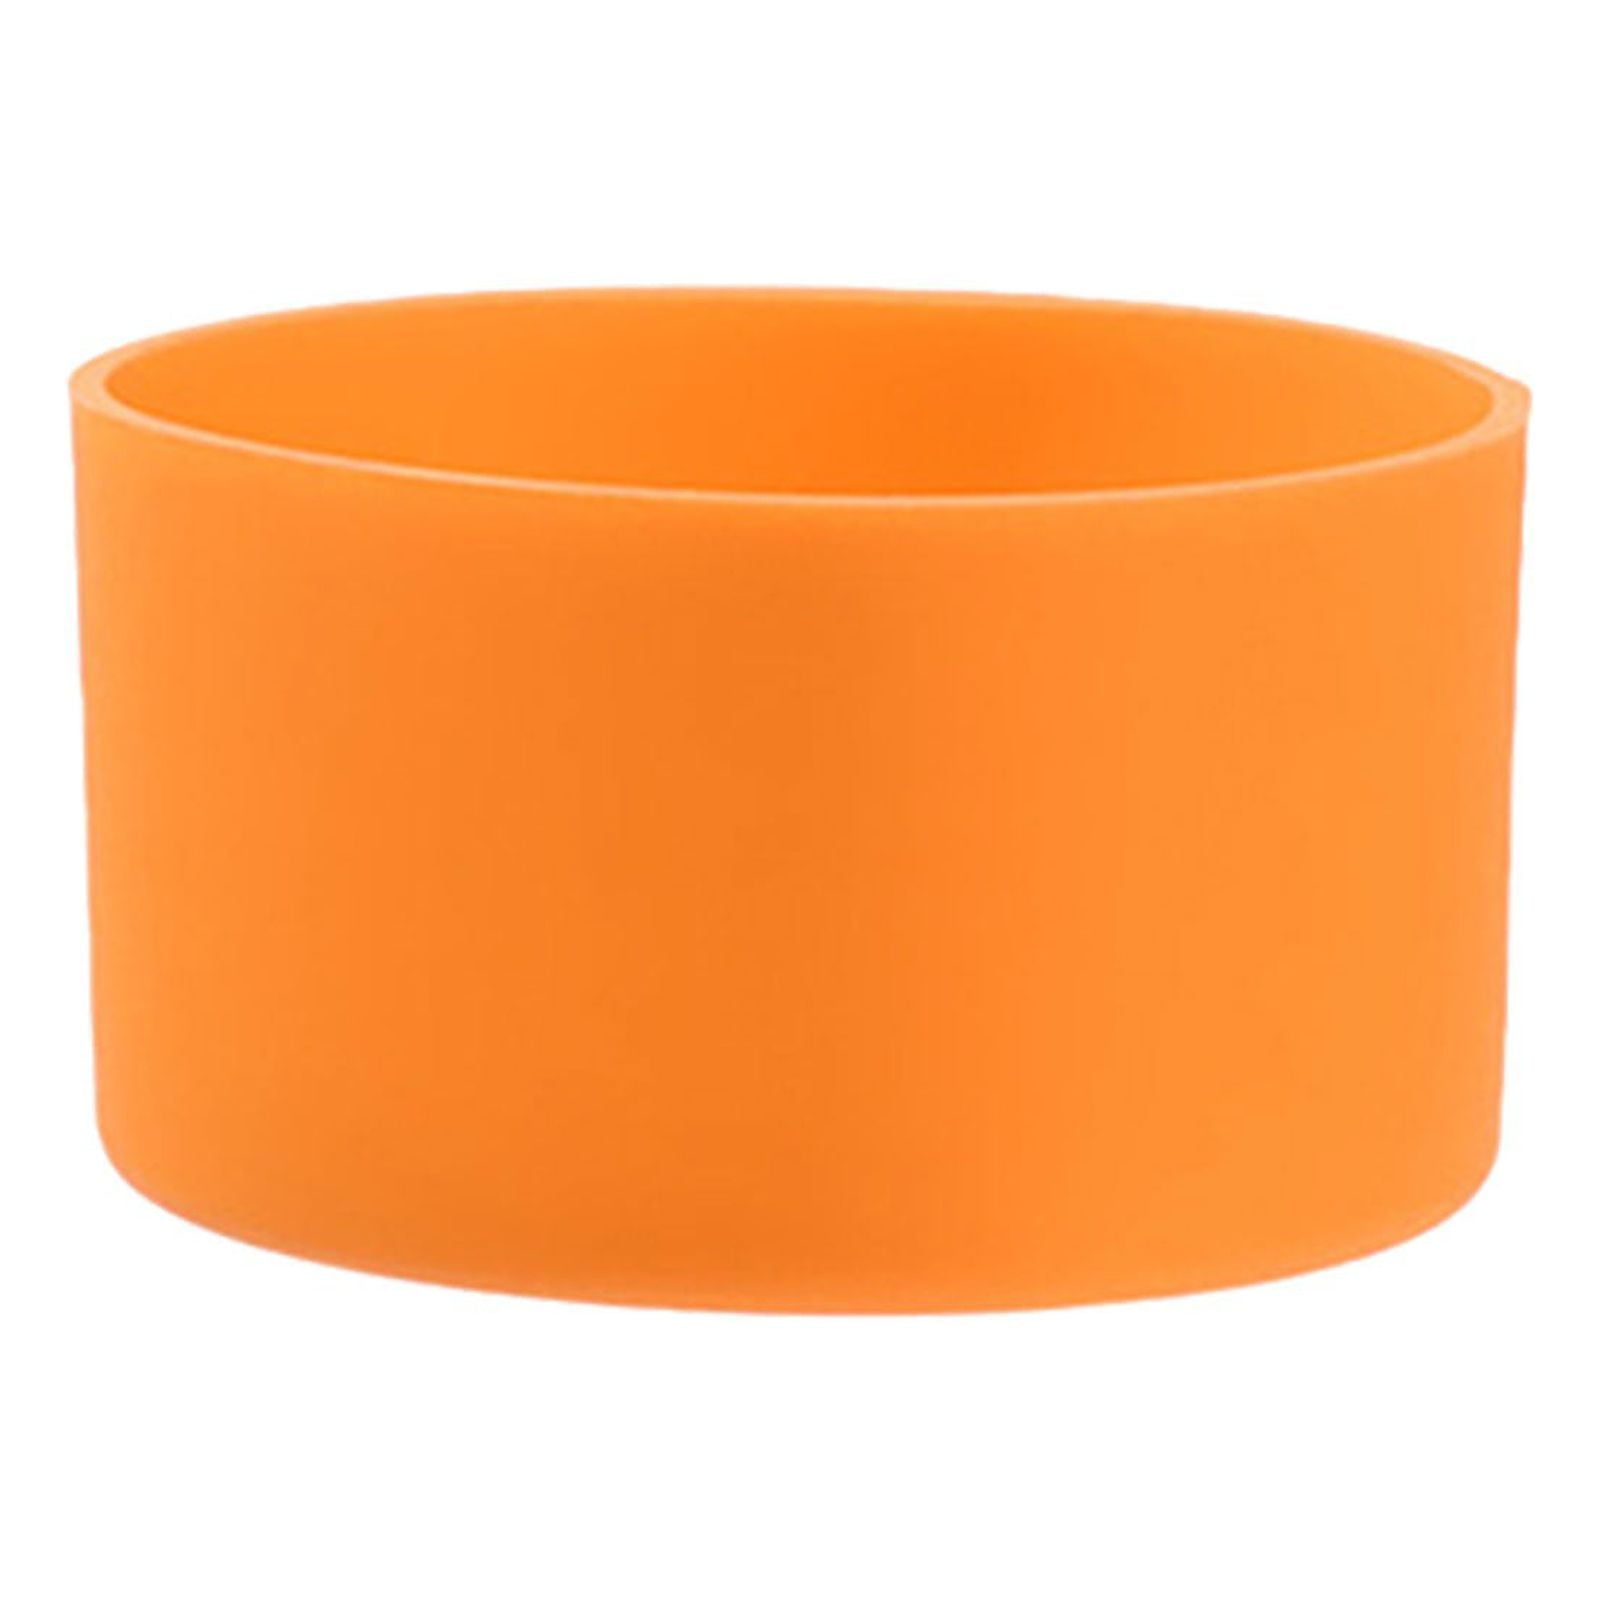 Cup-One Orange